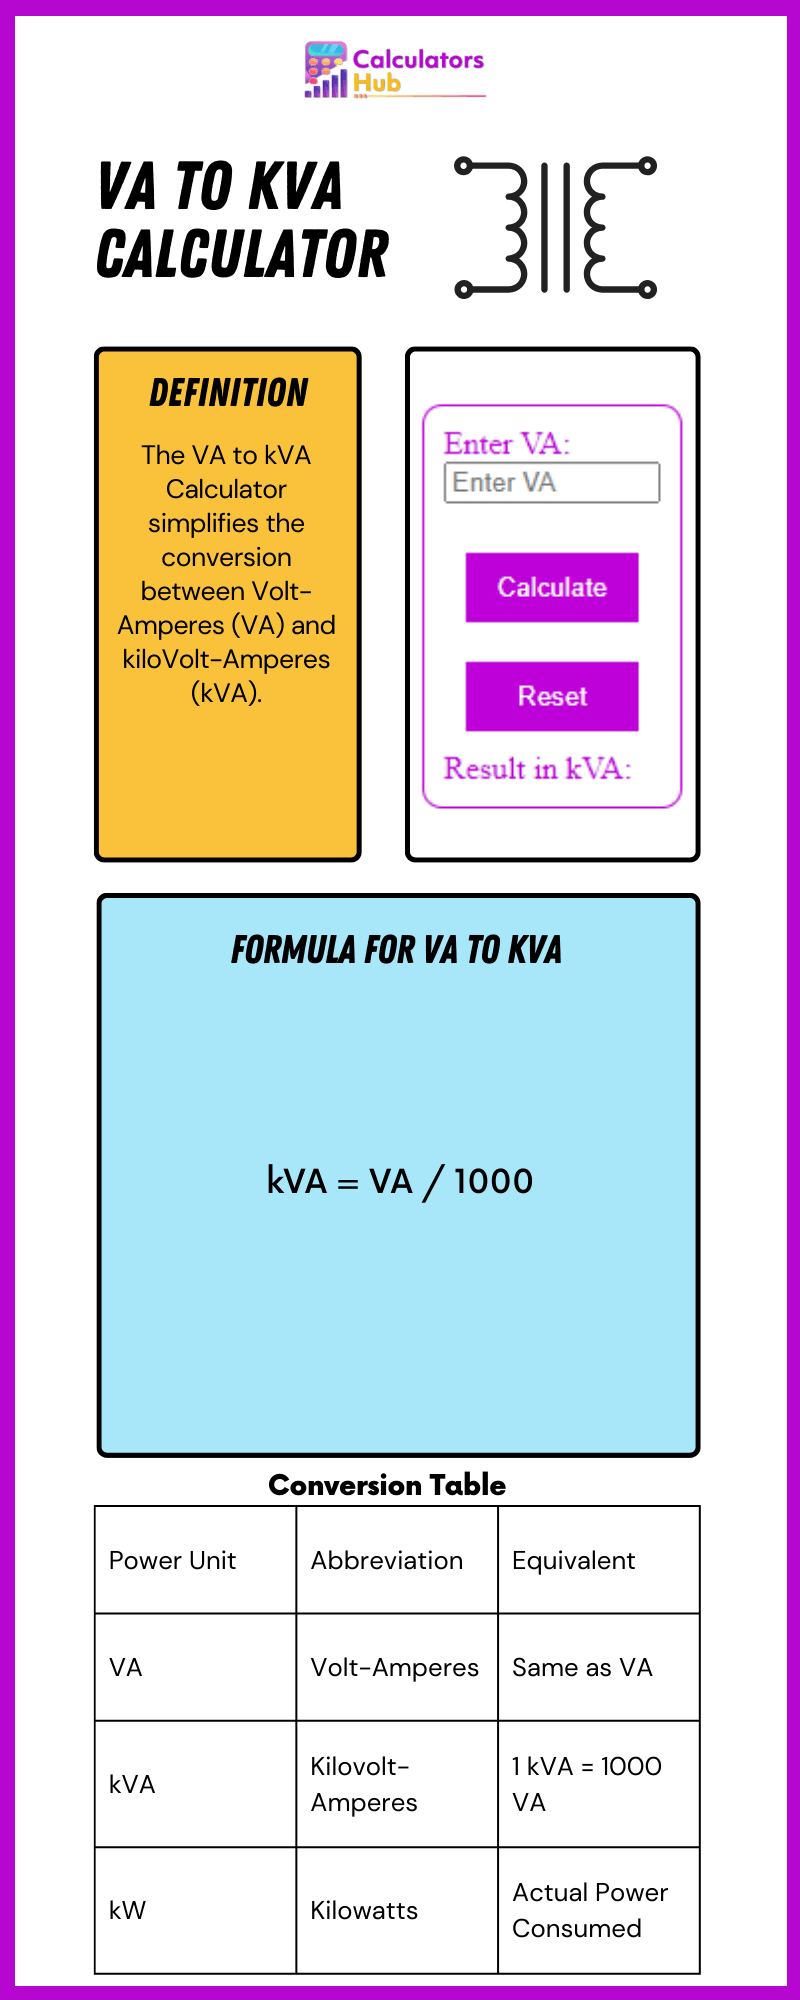 VA to kVA Calculator